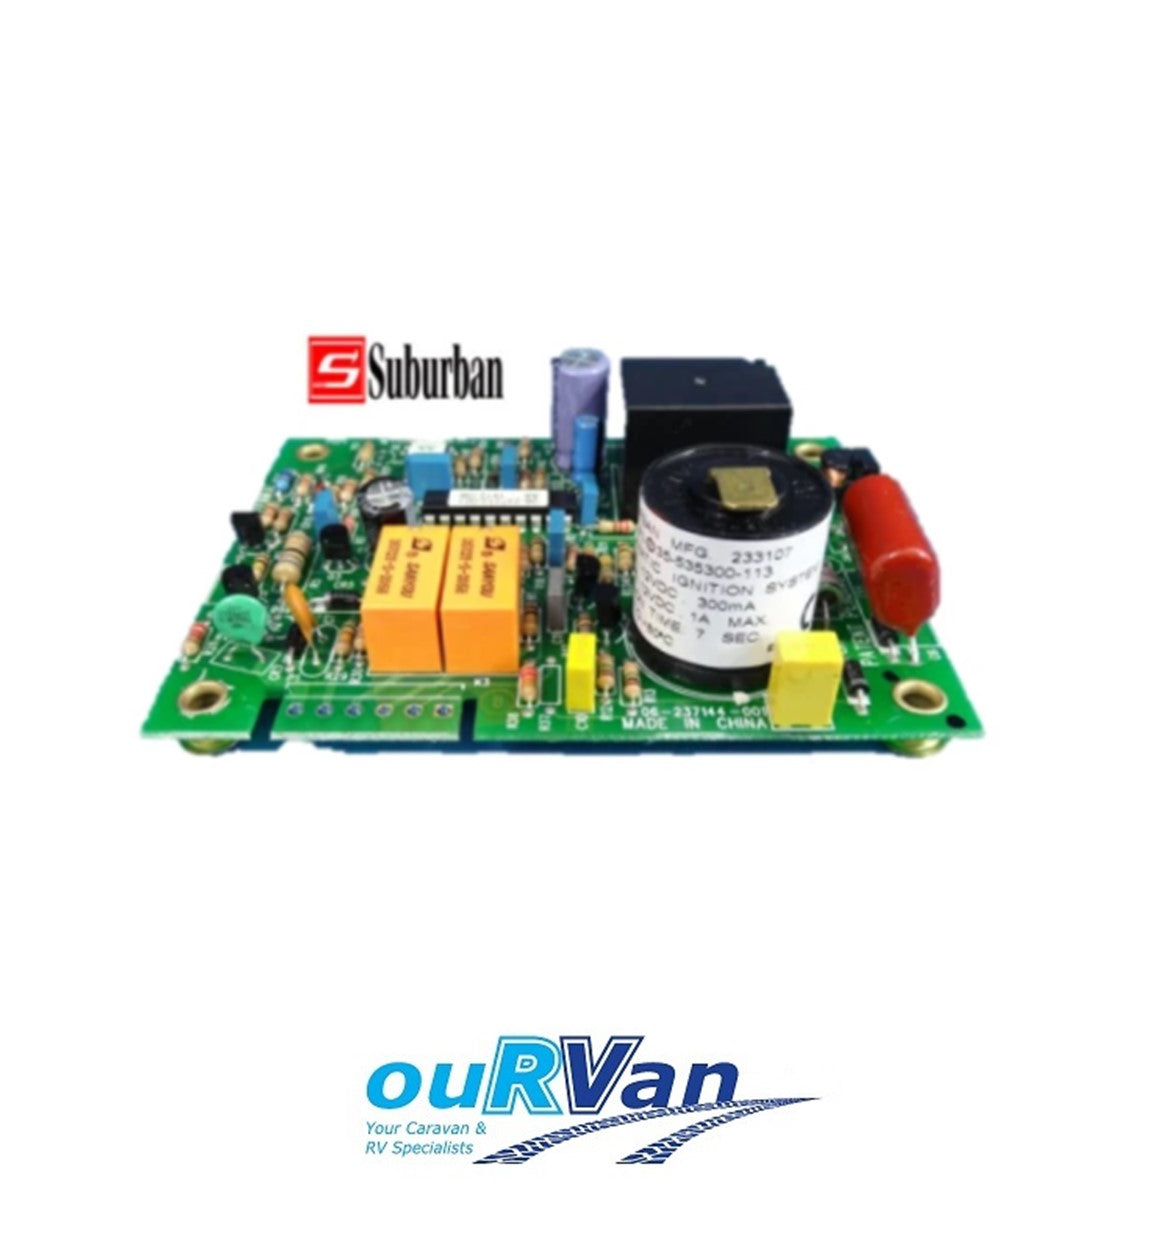 Suburban Hot Water Service Control Board Electronic Module